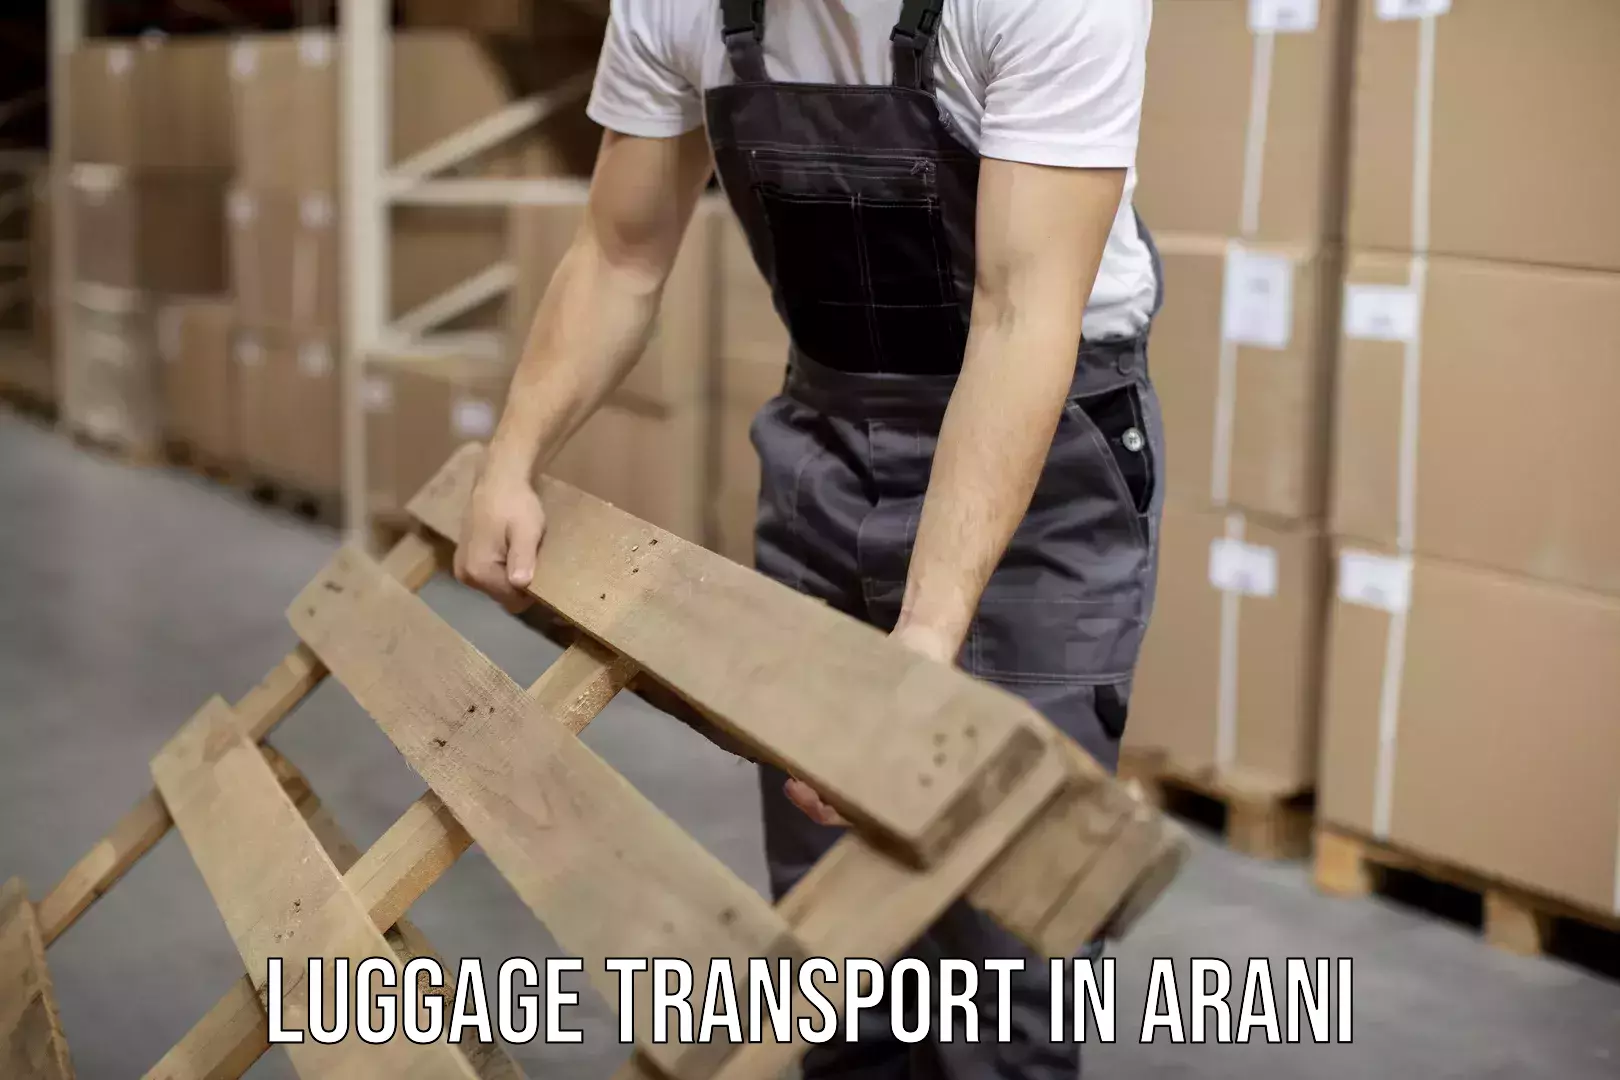 Luggage transport consultancy in Arani